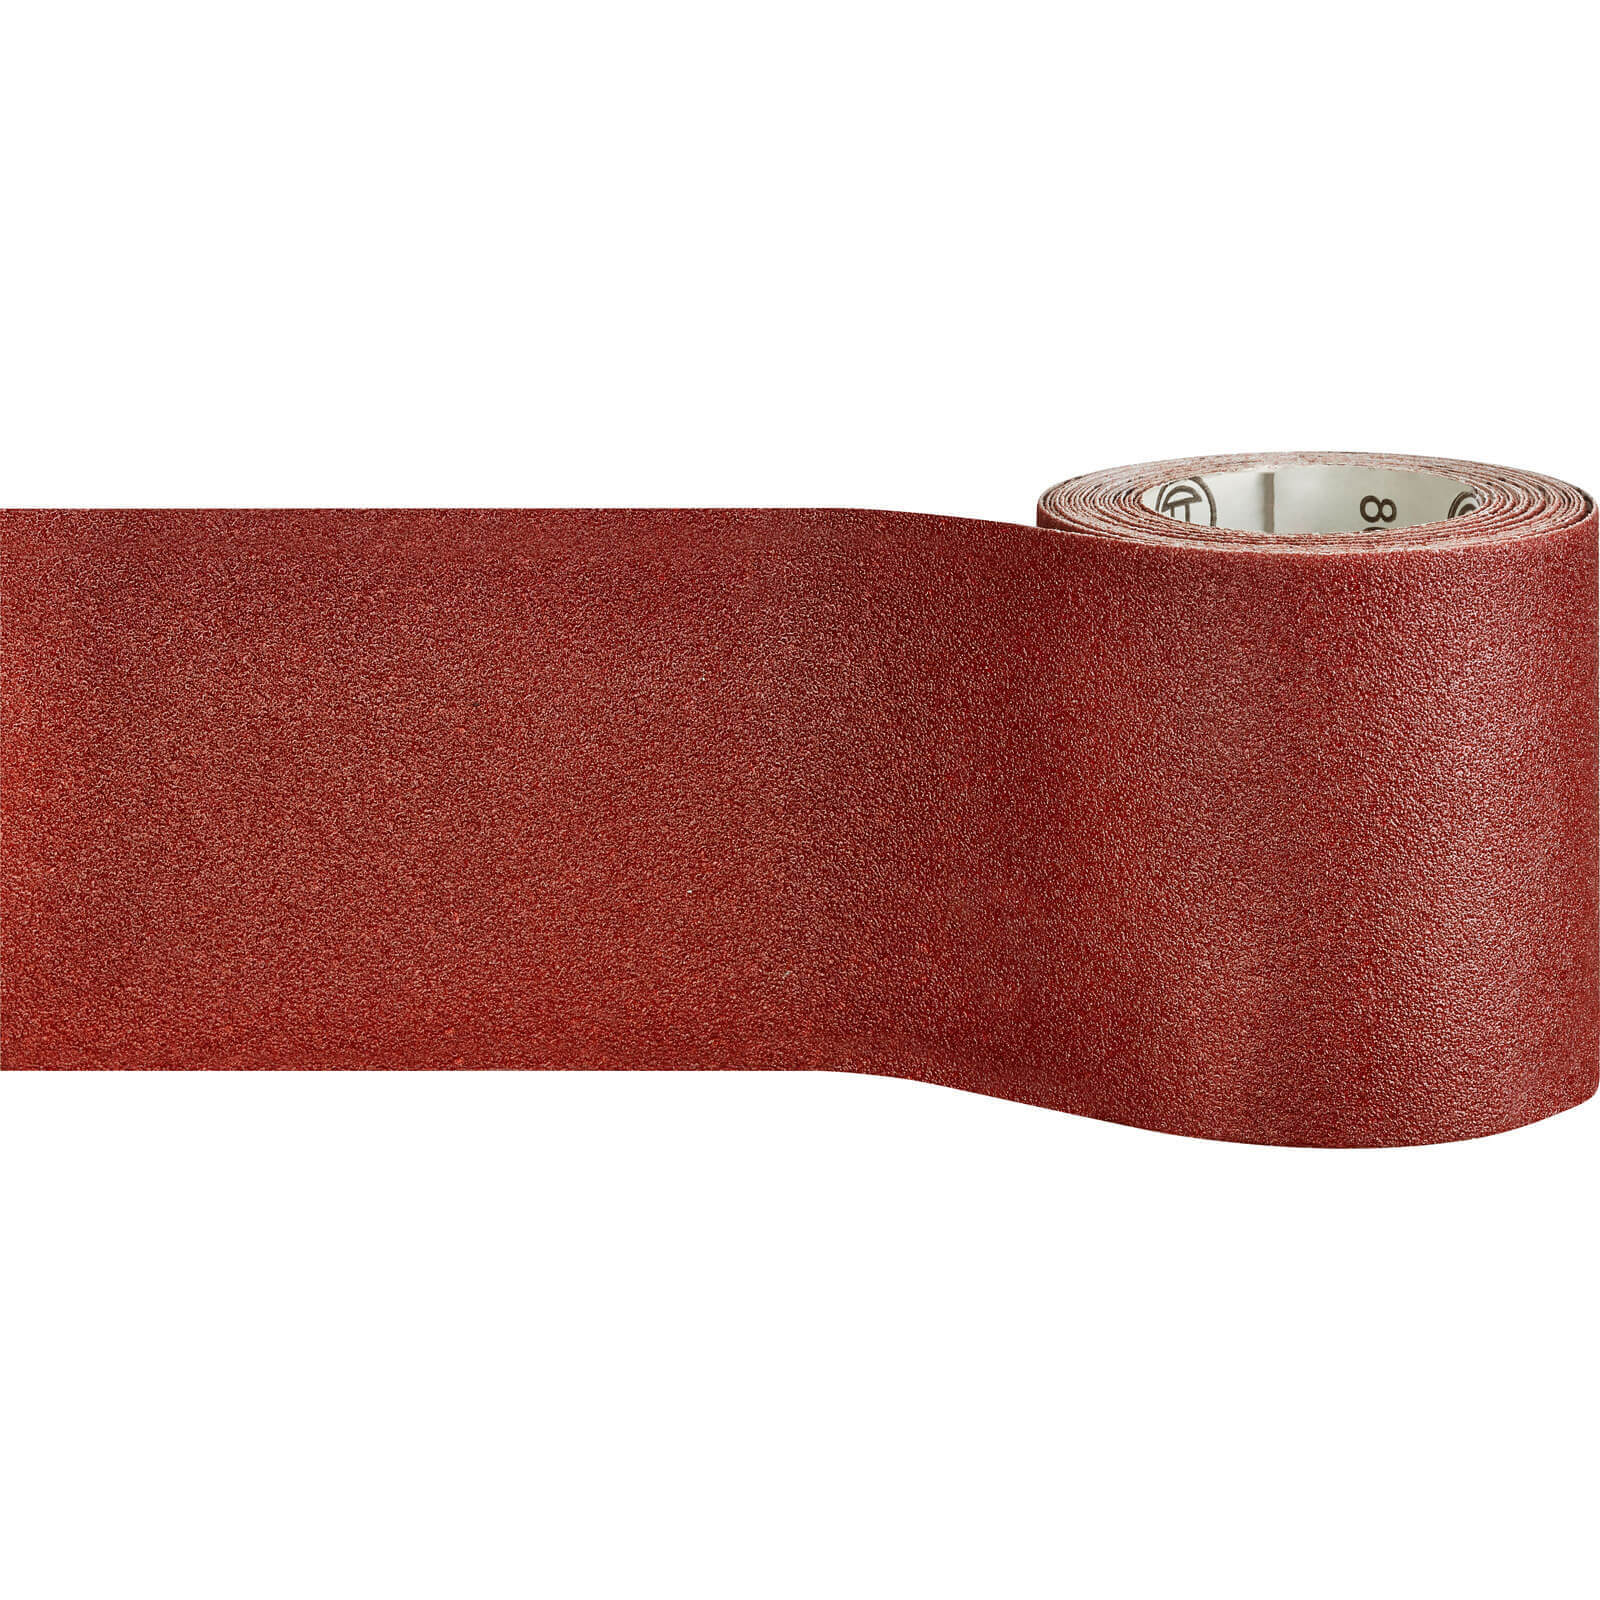 Photos - Abrasive Wheel / Belt Bosch Sanding Roll Red for Wood 115mm 5m 120g 2608606820 